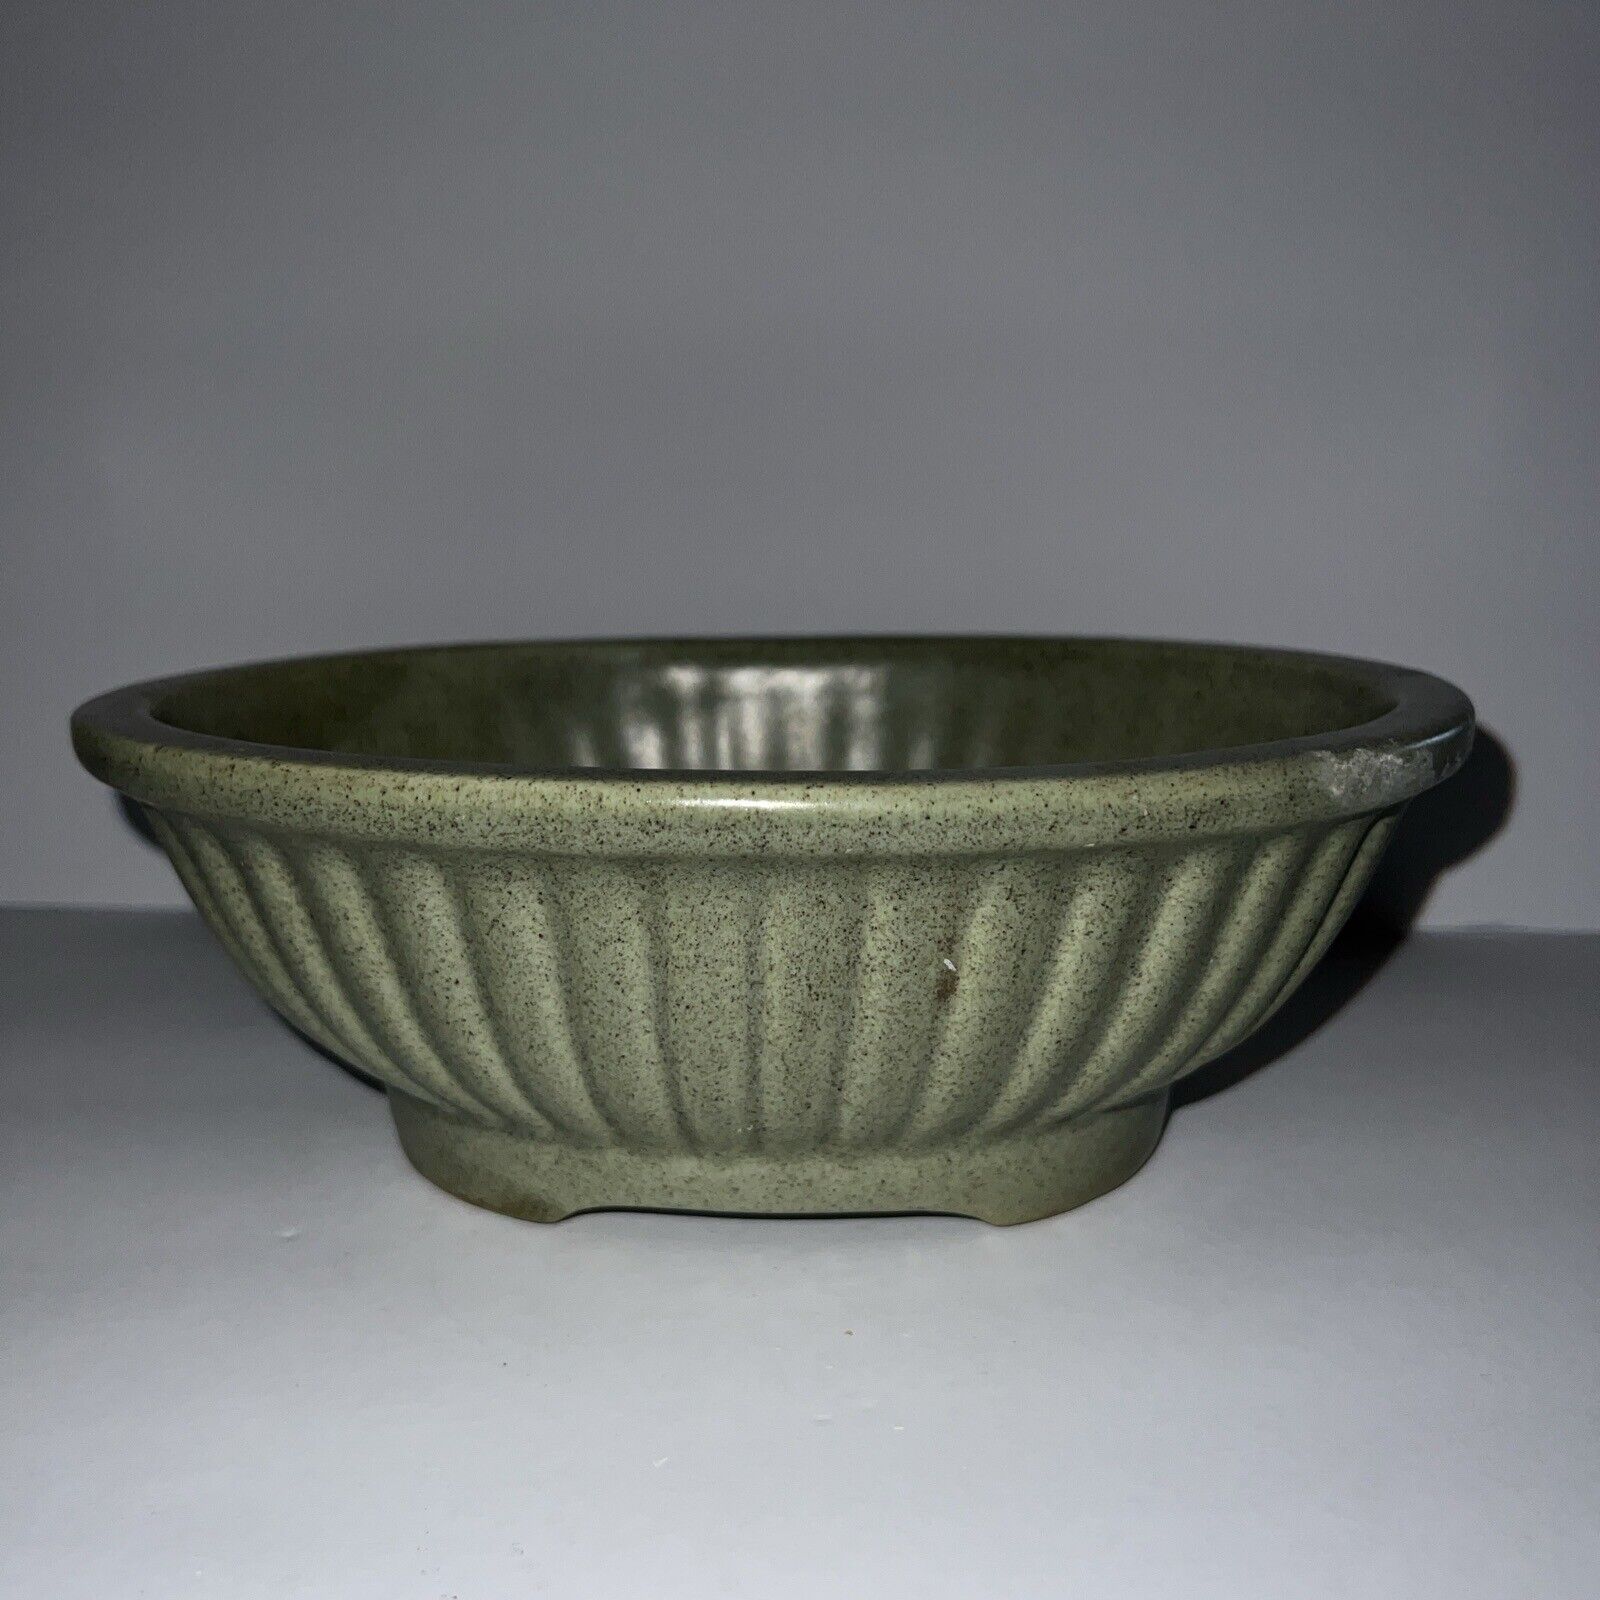 Vintage Haeger Oval Green Pottery Planter Bowl 3938A Speckled Matte Finish USA